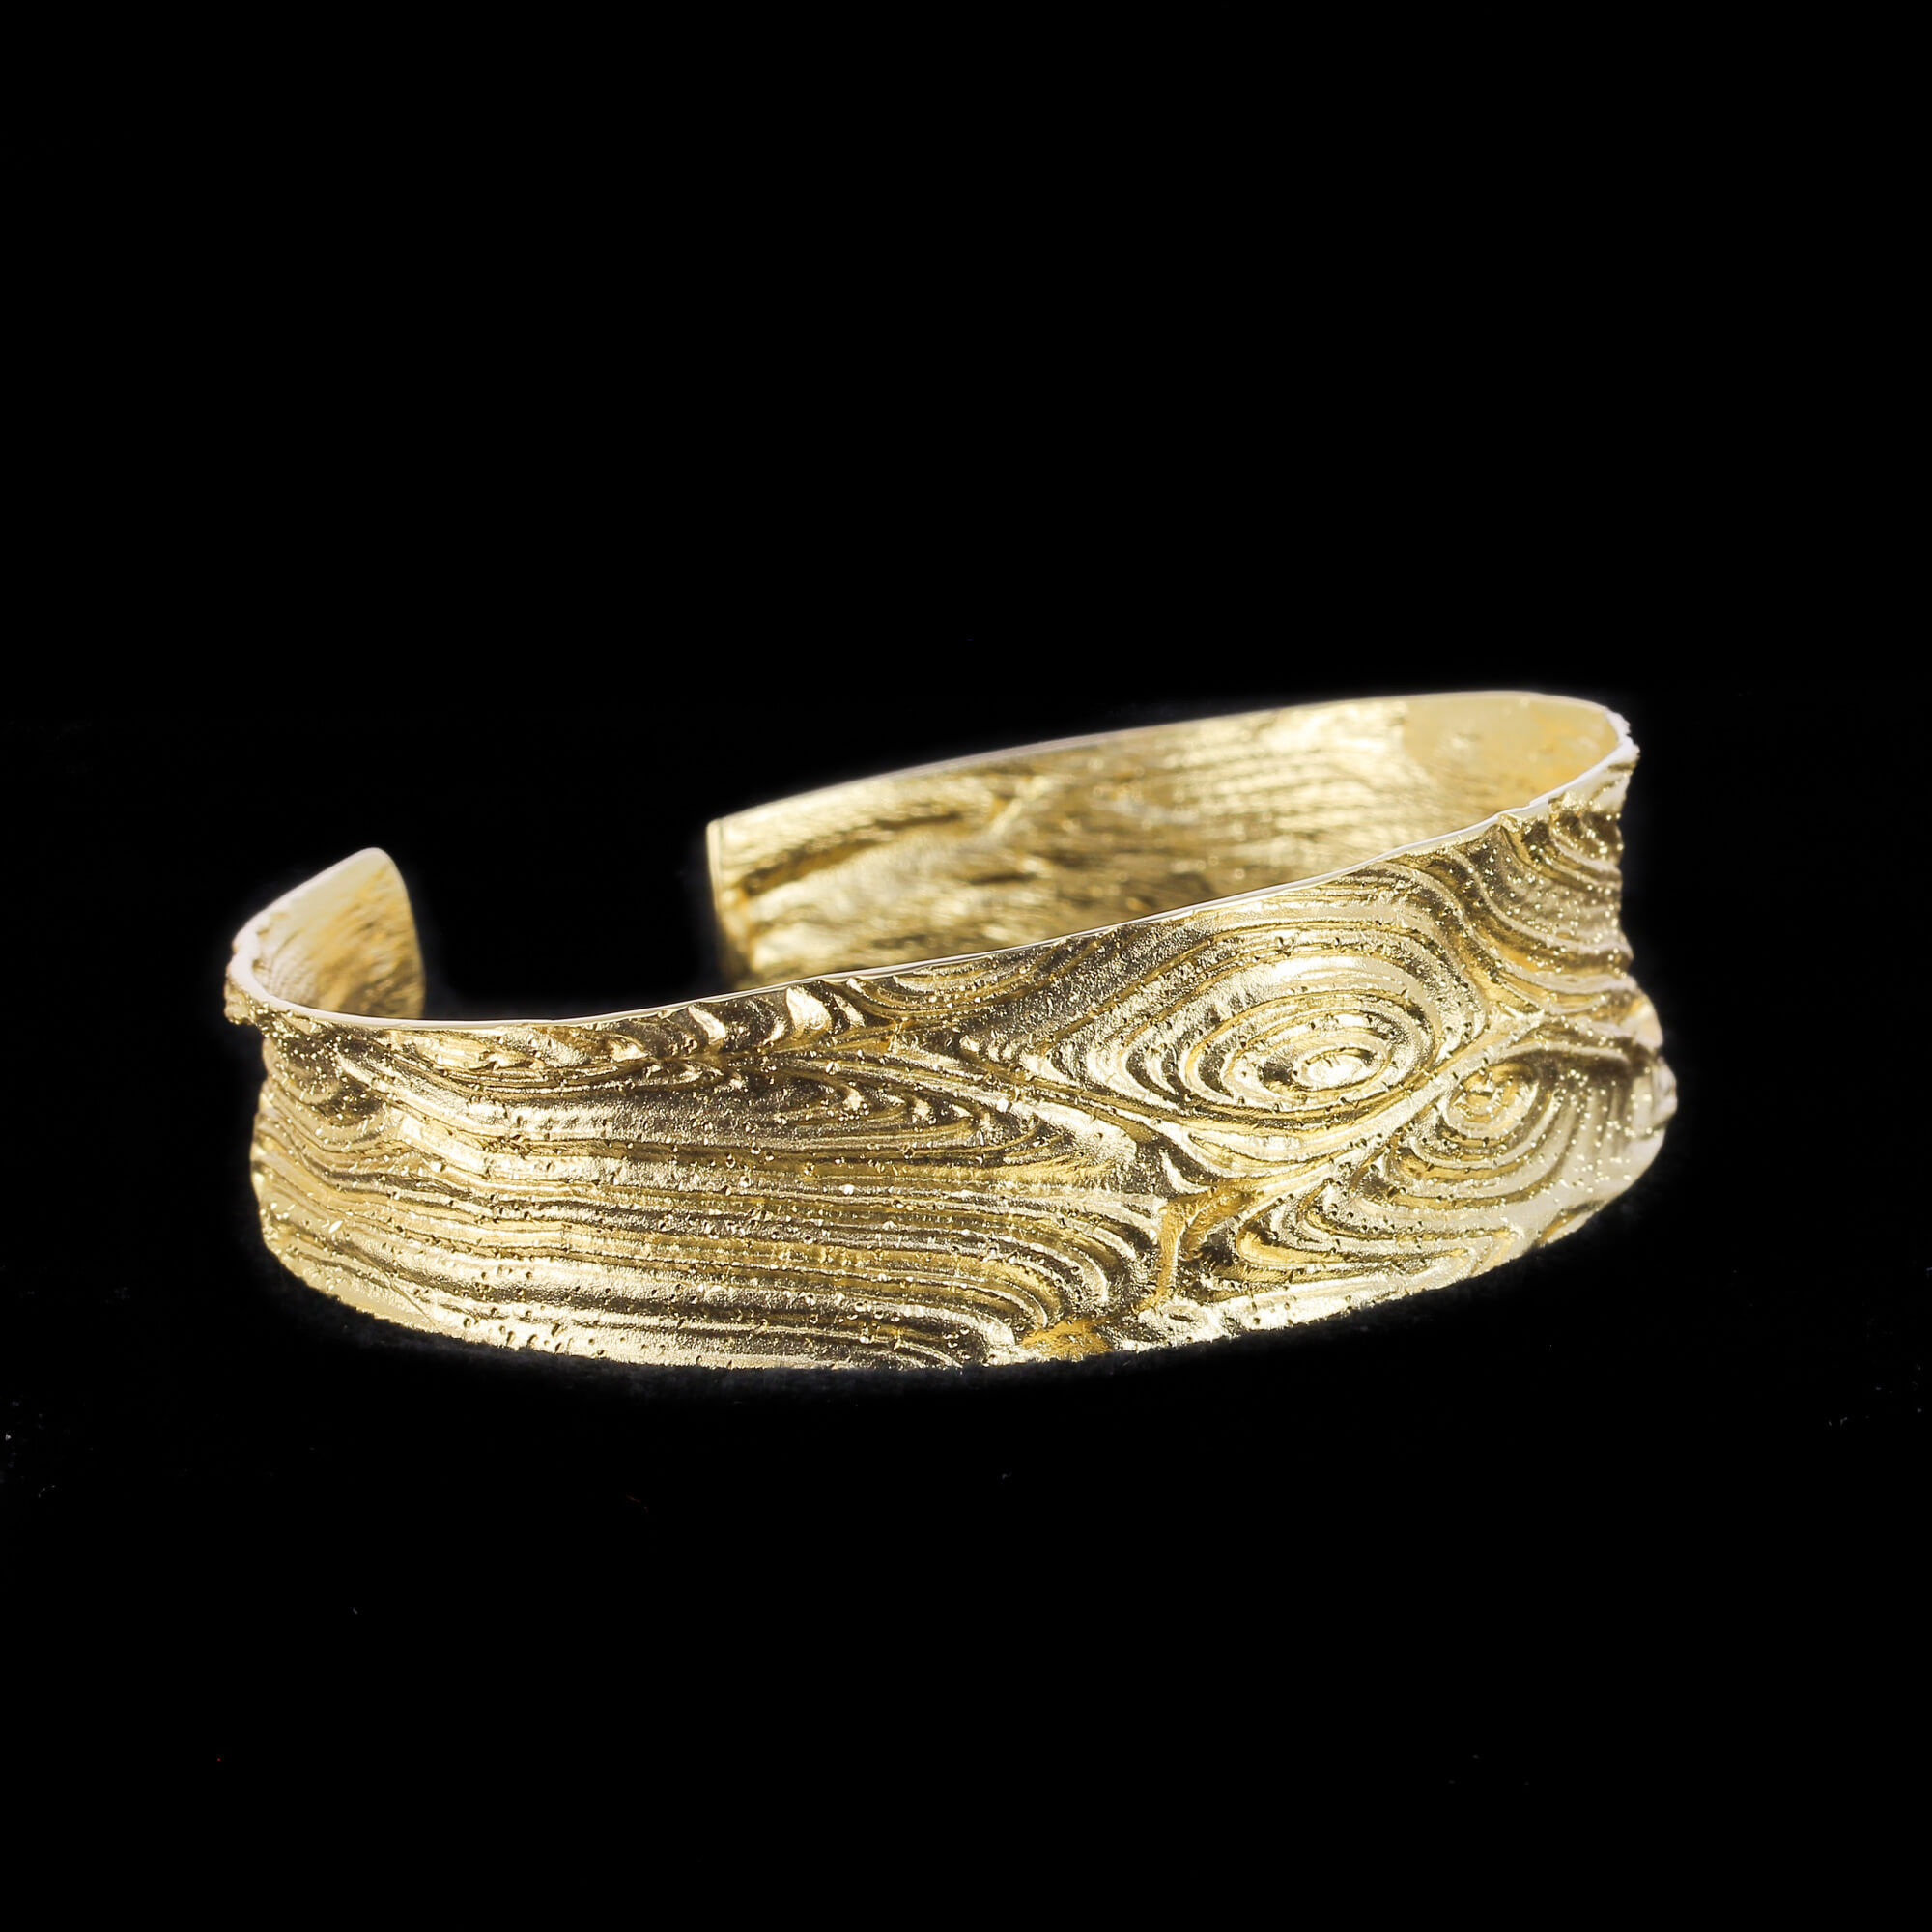 Gilt and narrow processed slave bracelet